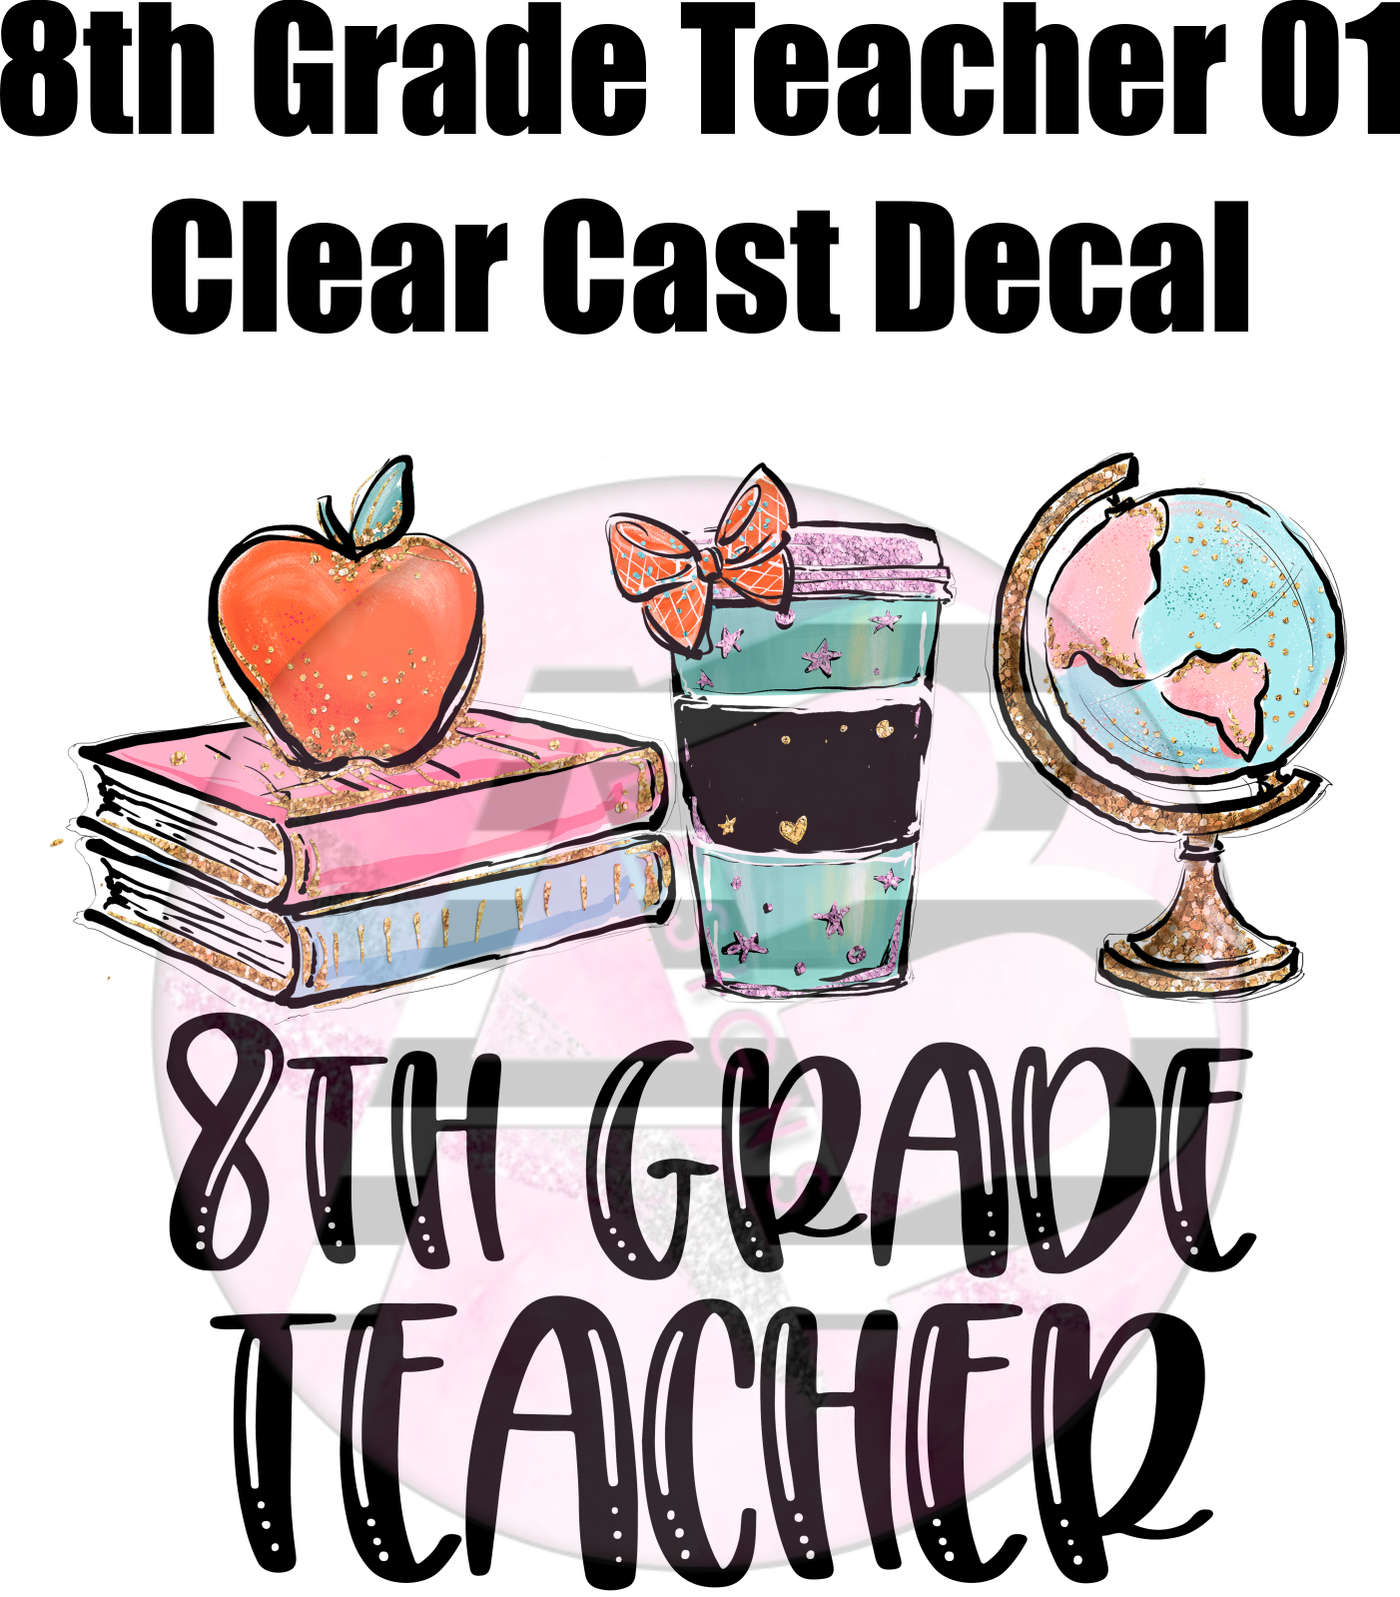 8th Grade Teacher 01 - Clear Cast Decal